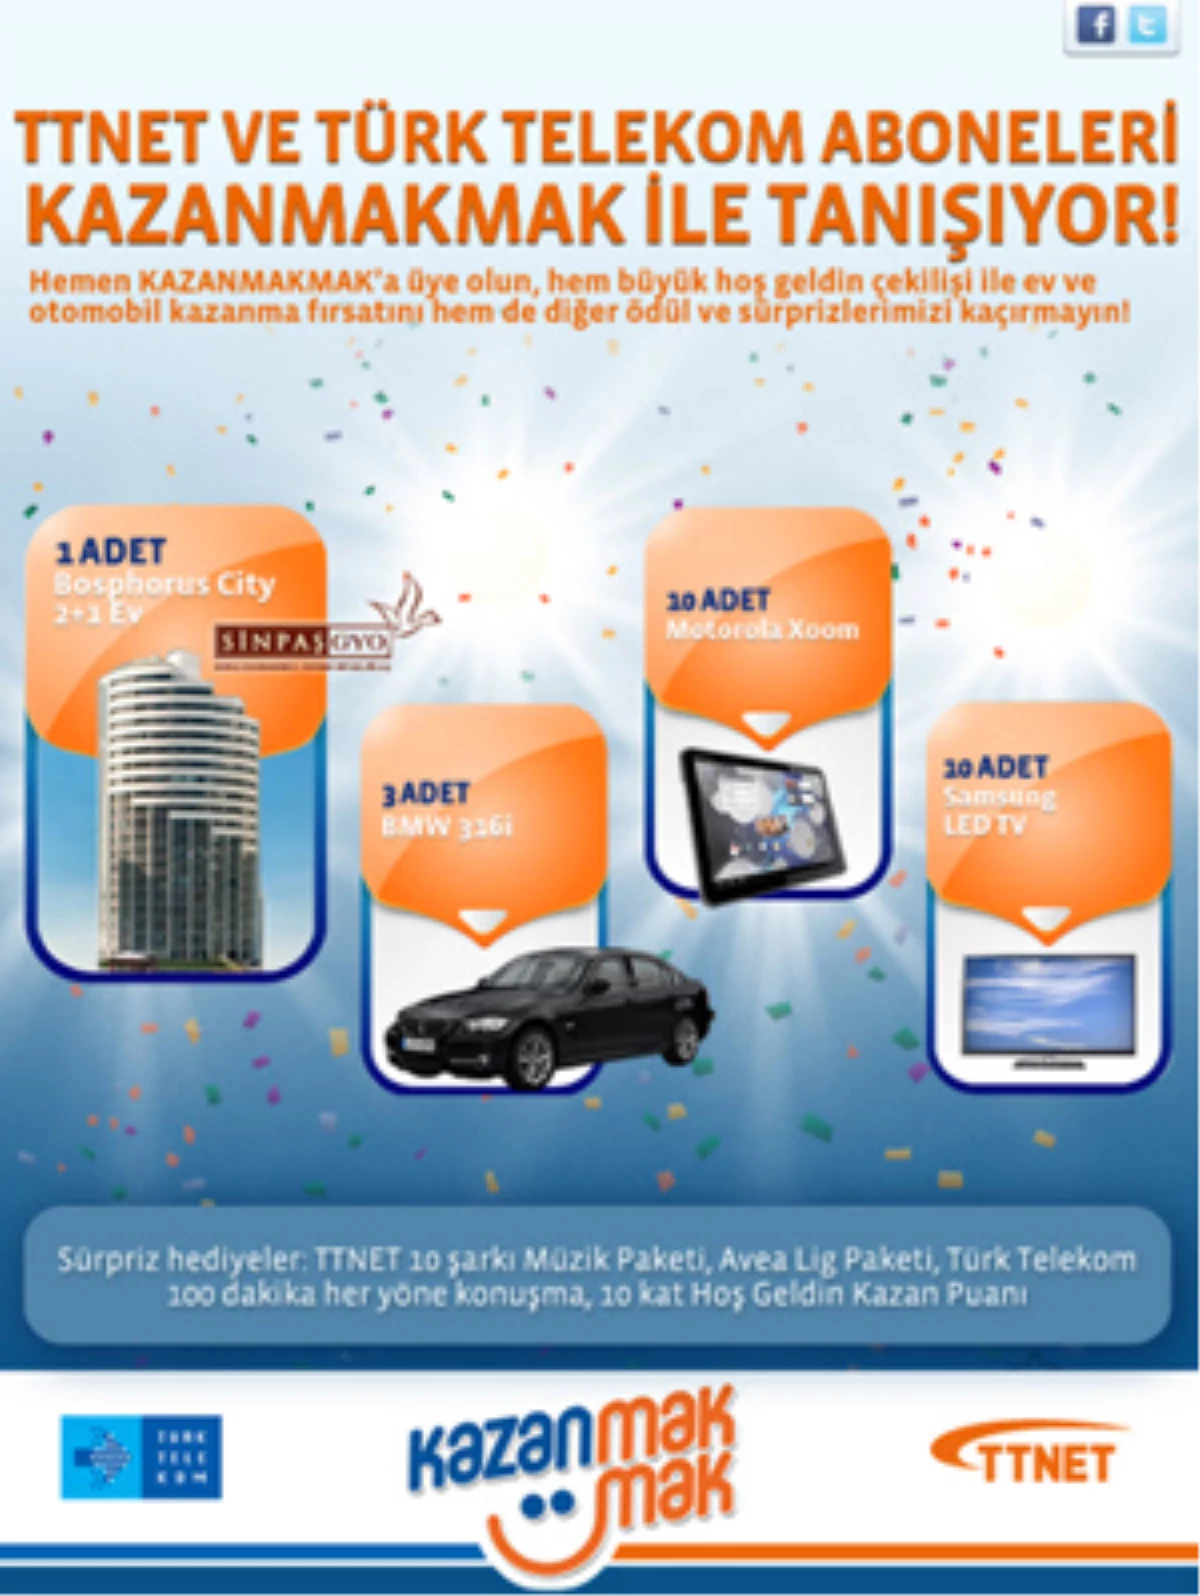 Türk Telekom ve TTNET\'ten KAZANMAKMAK
